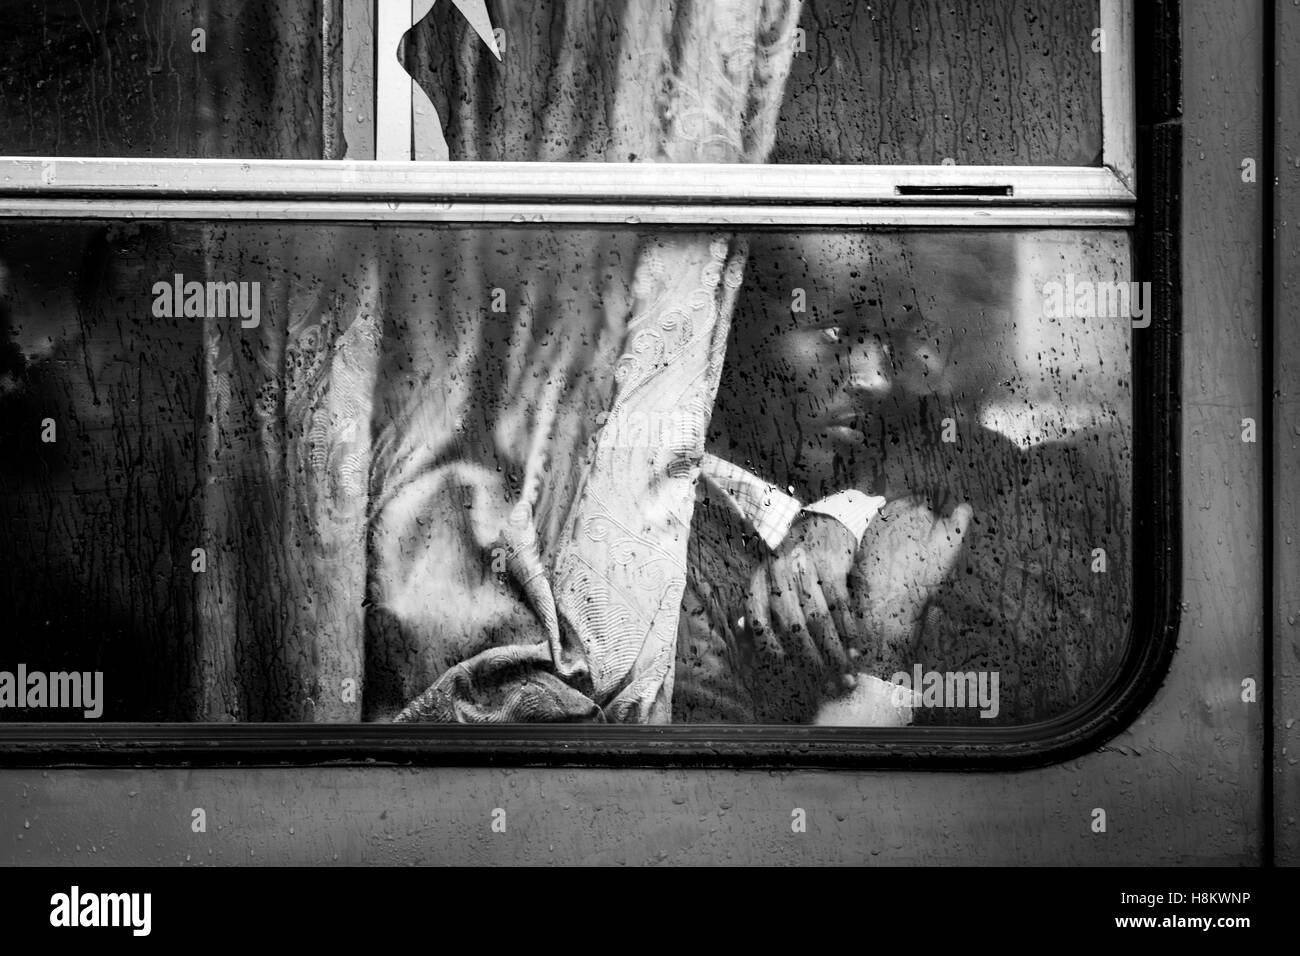 Meki Batu, Ethiopia - Dramatic portrait of an Ethiopian man sitting inside a bus while it rains outside in Meki Batu. Stock Photo